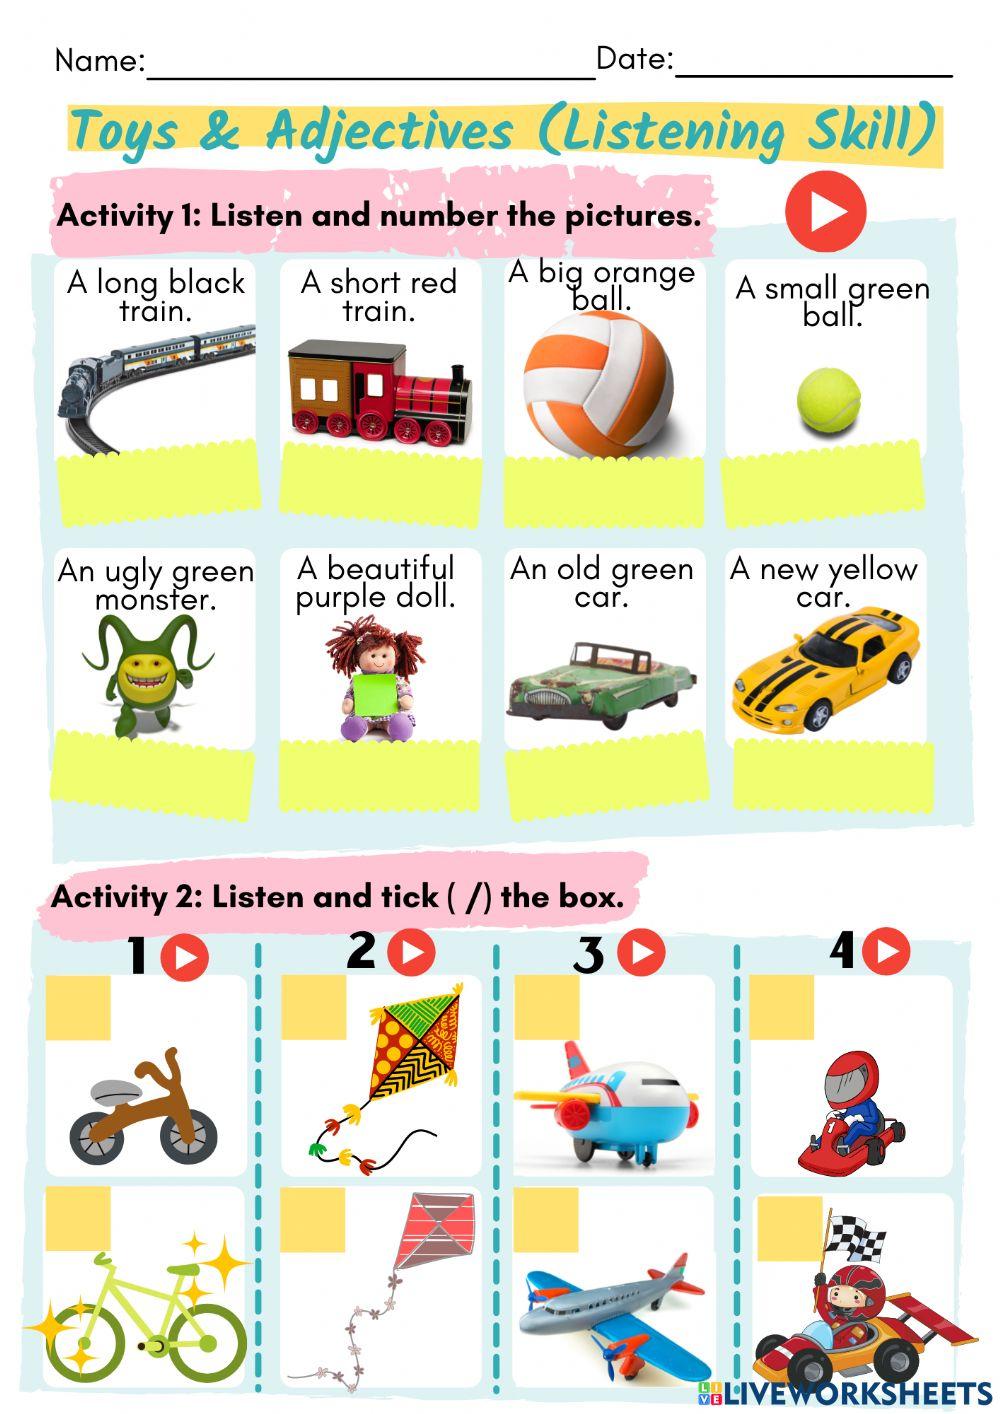 Toys - Adjectives (Listening Skill)